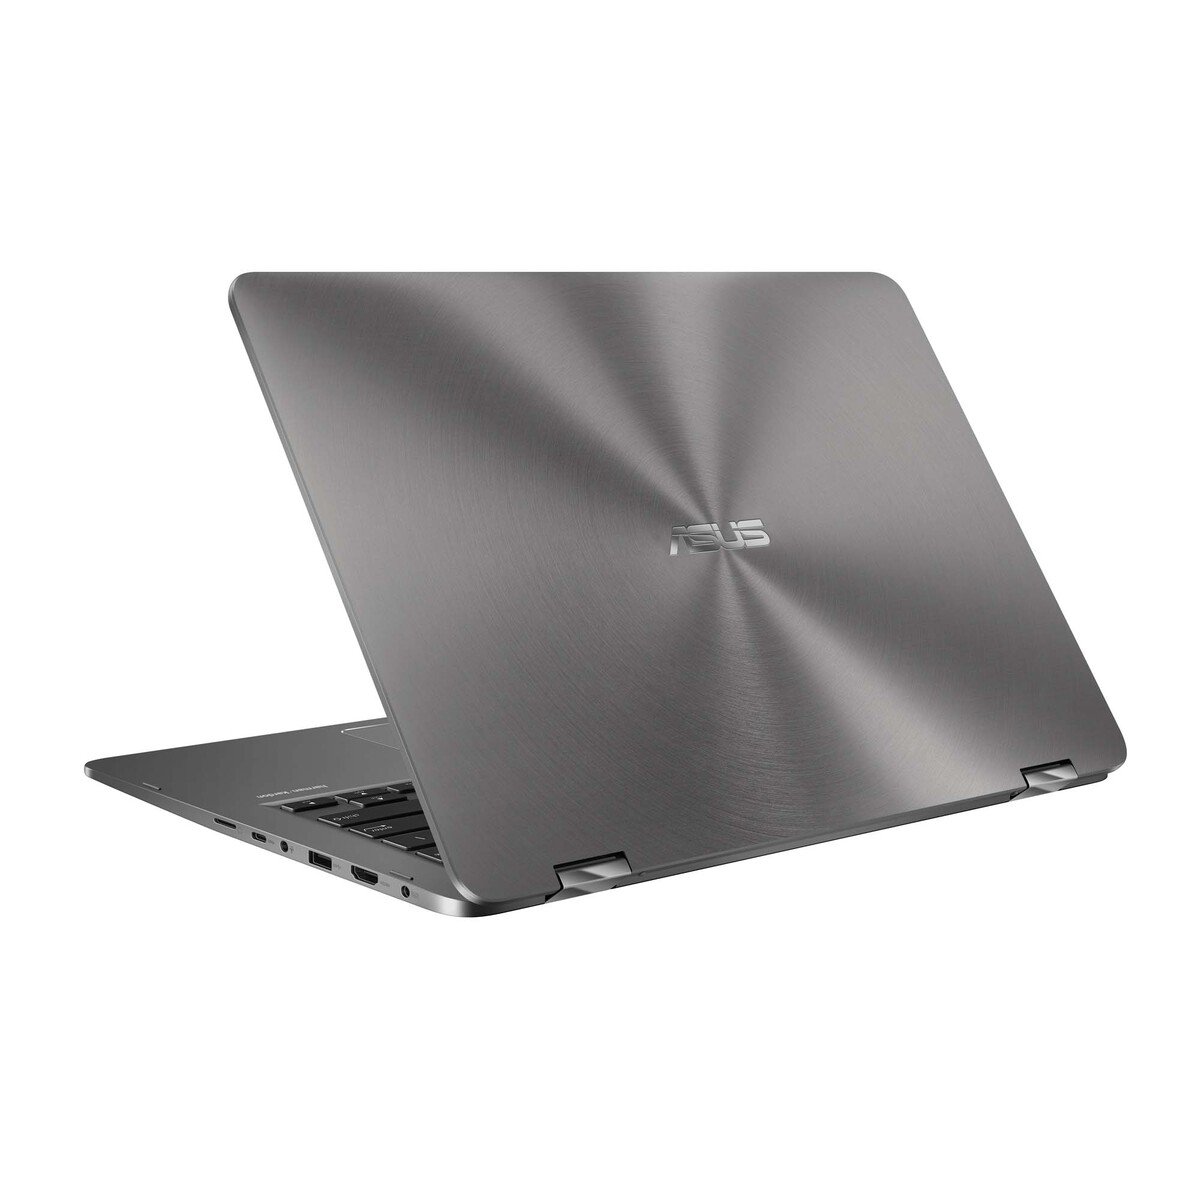 Asus ZenBook Flip 14 UX461FN-E1022TS 2-in-1 Ultrabook, Intel i7-8565U , 16GB RAM, 512GB PCIE NVME SSD, Nvidia MX150 2GB, 14 Inches Touch LED, Windows 10, Grey